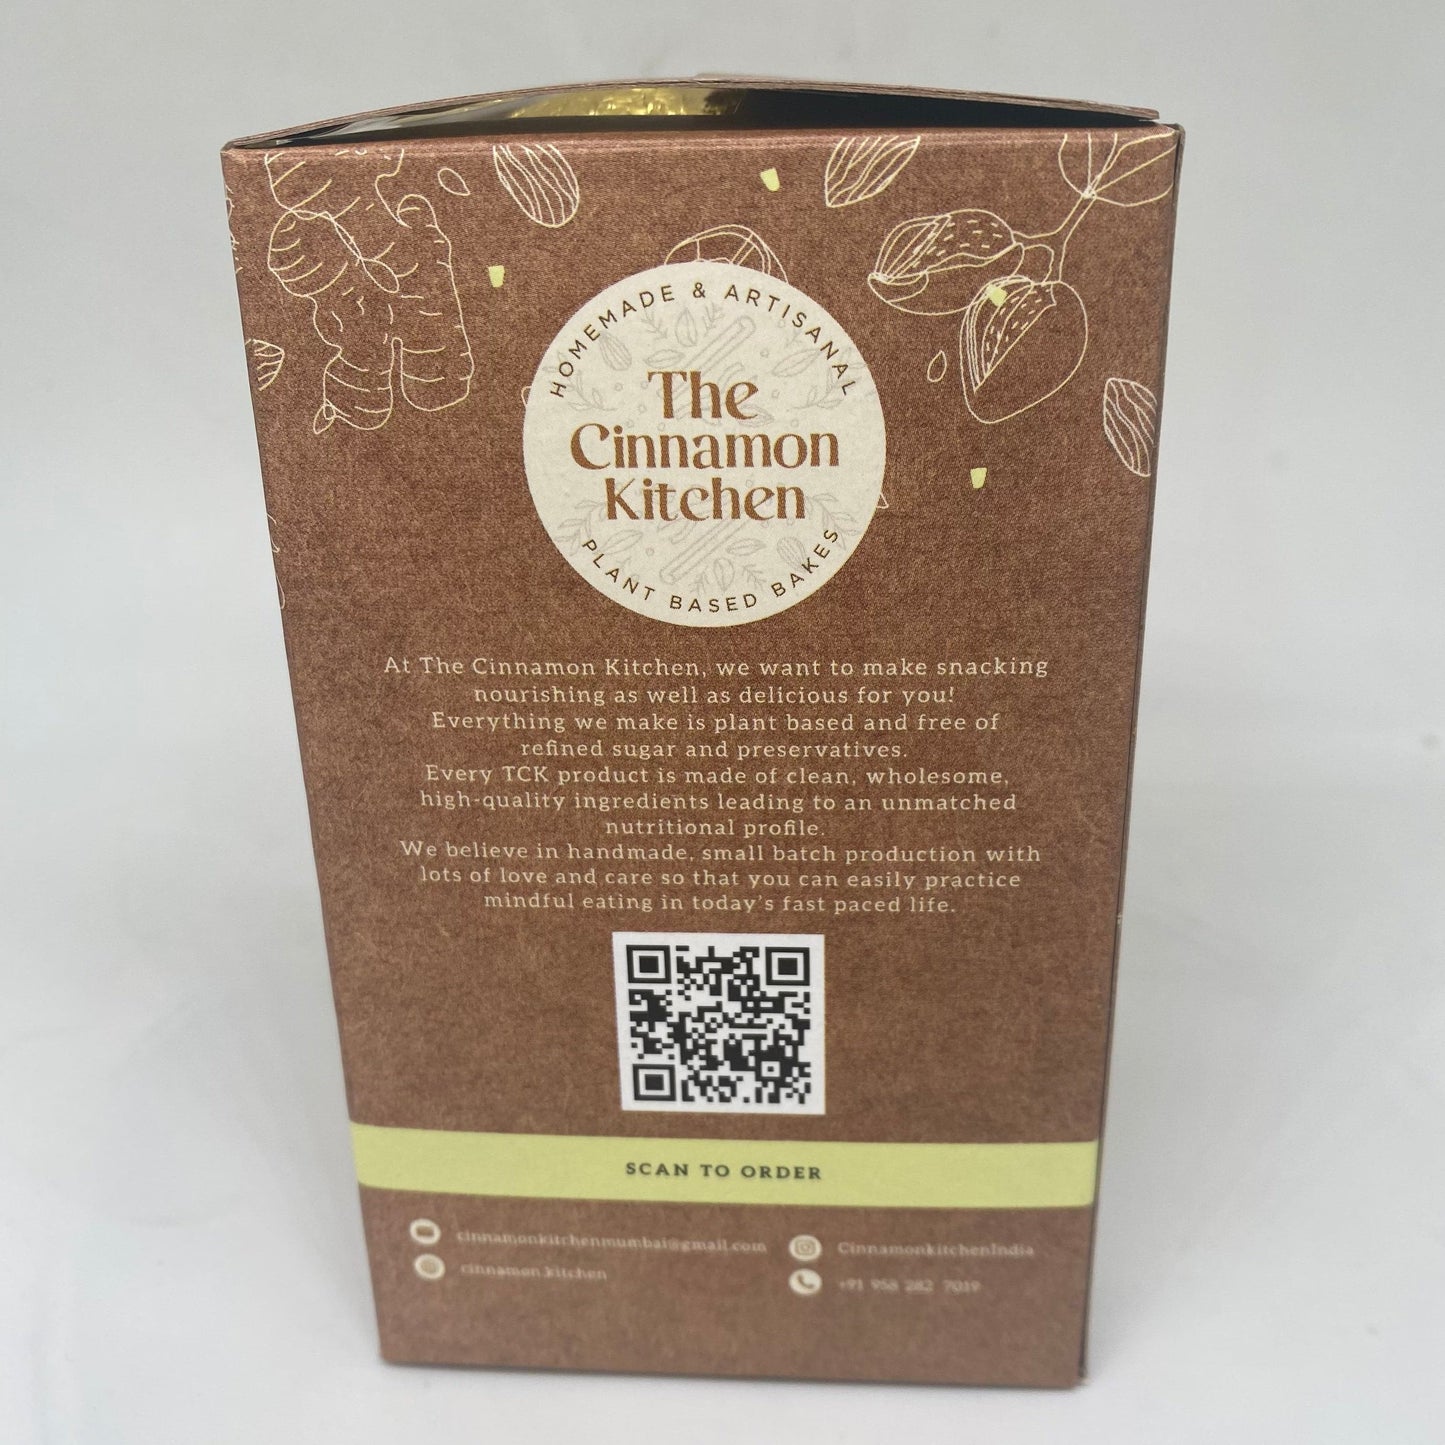 The Cinnamon Kitchen Ginger Cookies (Box of 6 cookies - 220g) - Gluten Free